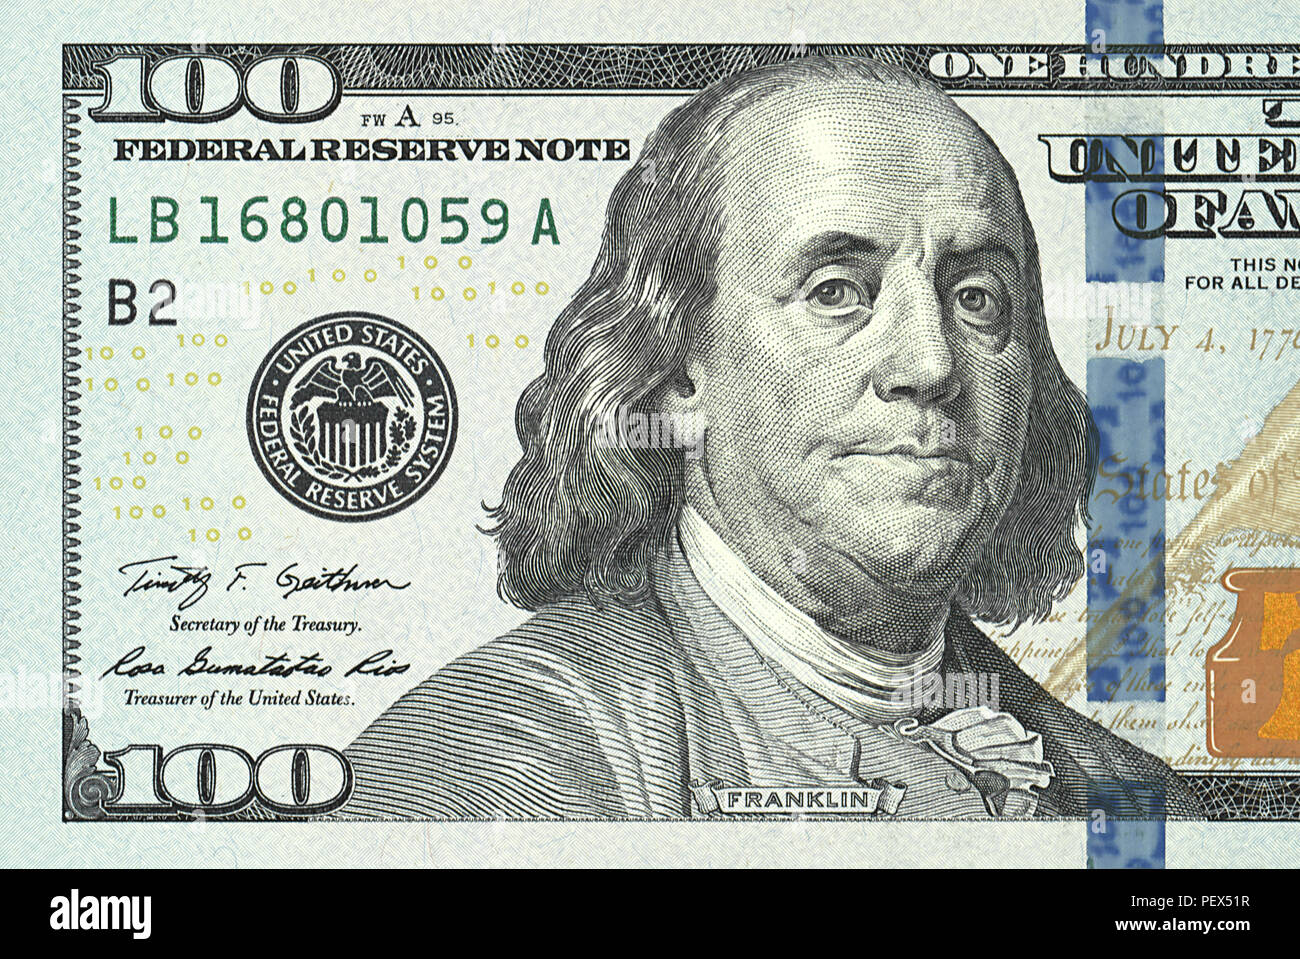 One Hundred Dollars Bill Closeup Detailed Image Stock Photo Alamy